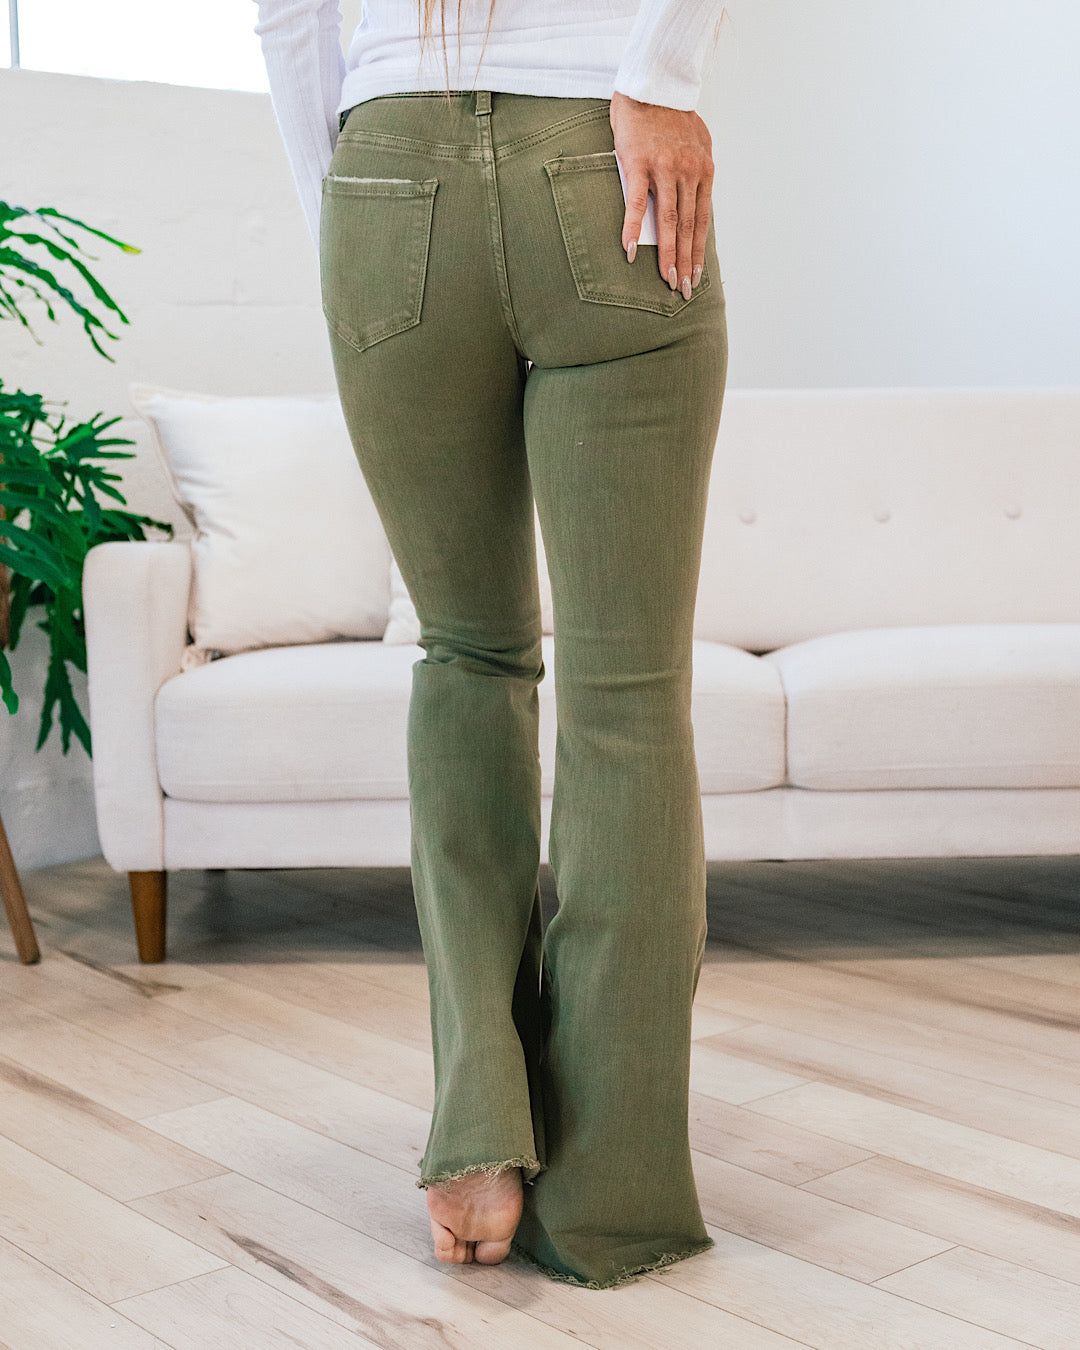 Vervet Devin Non Distressed Flare Jeans - Covert Green FINAL SALE  Vervet   